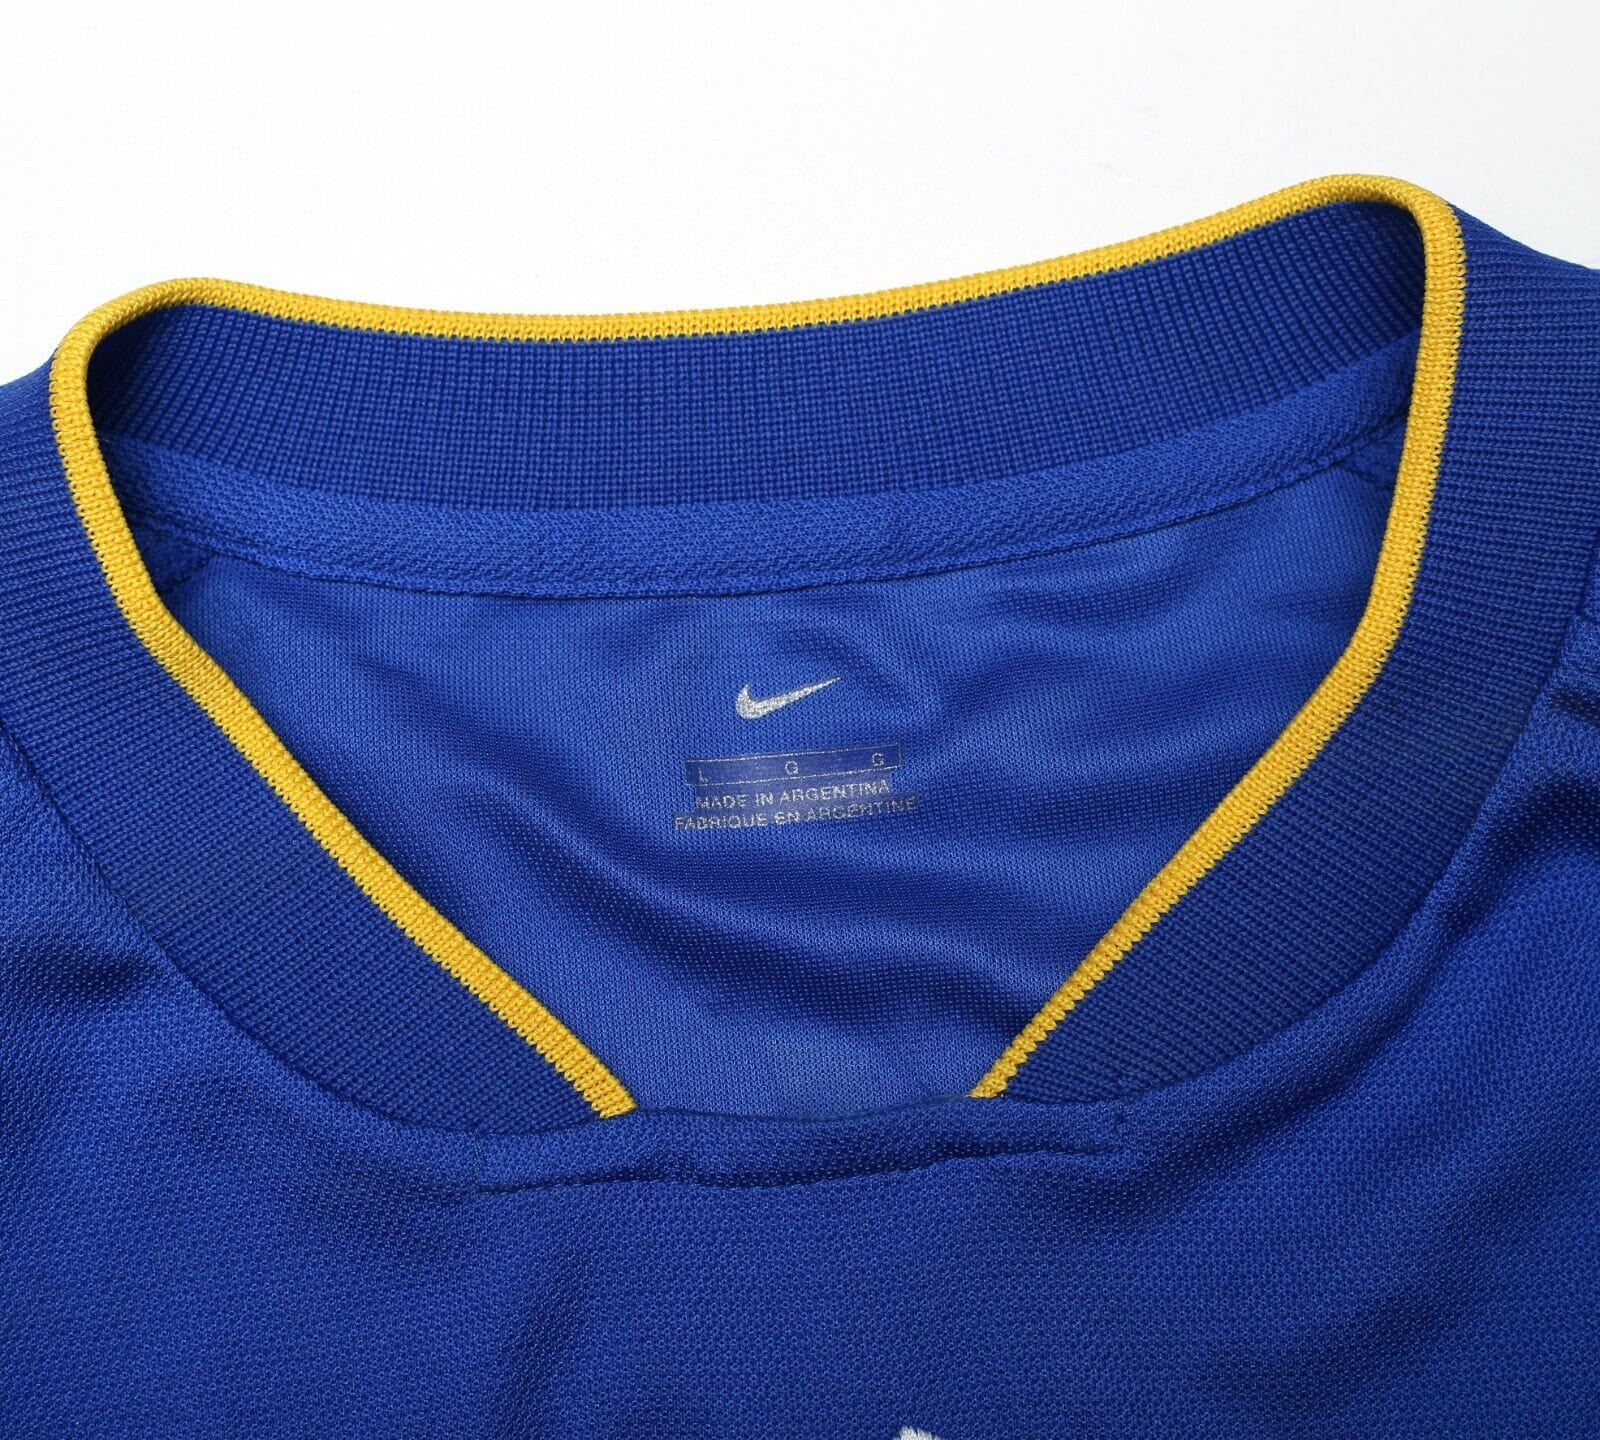 2001/02 BOCA JUNIORS Vintage Nike Home Football Shirt Jersey (L) BNWT